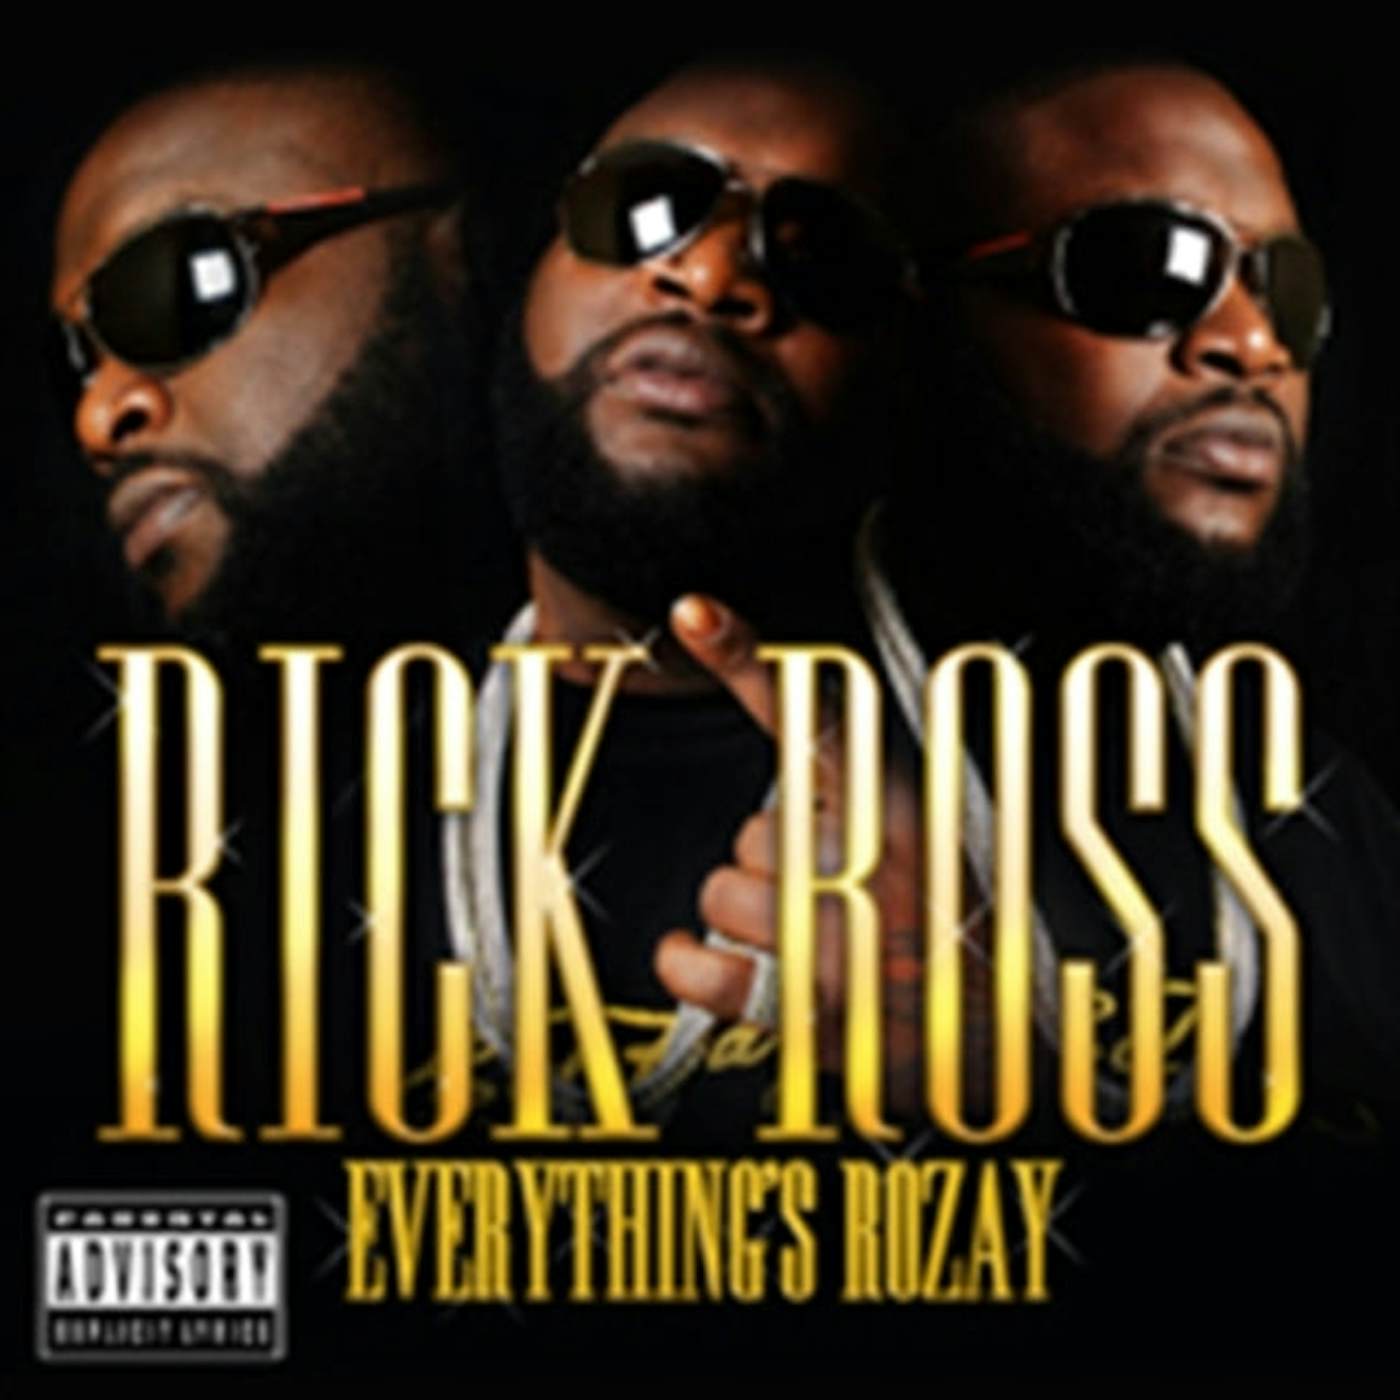 Rick Ross CD - Everything's Rozay